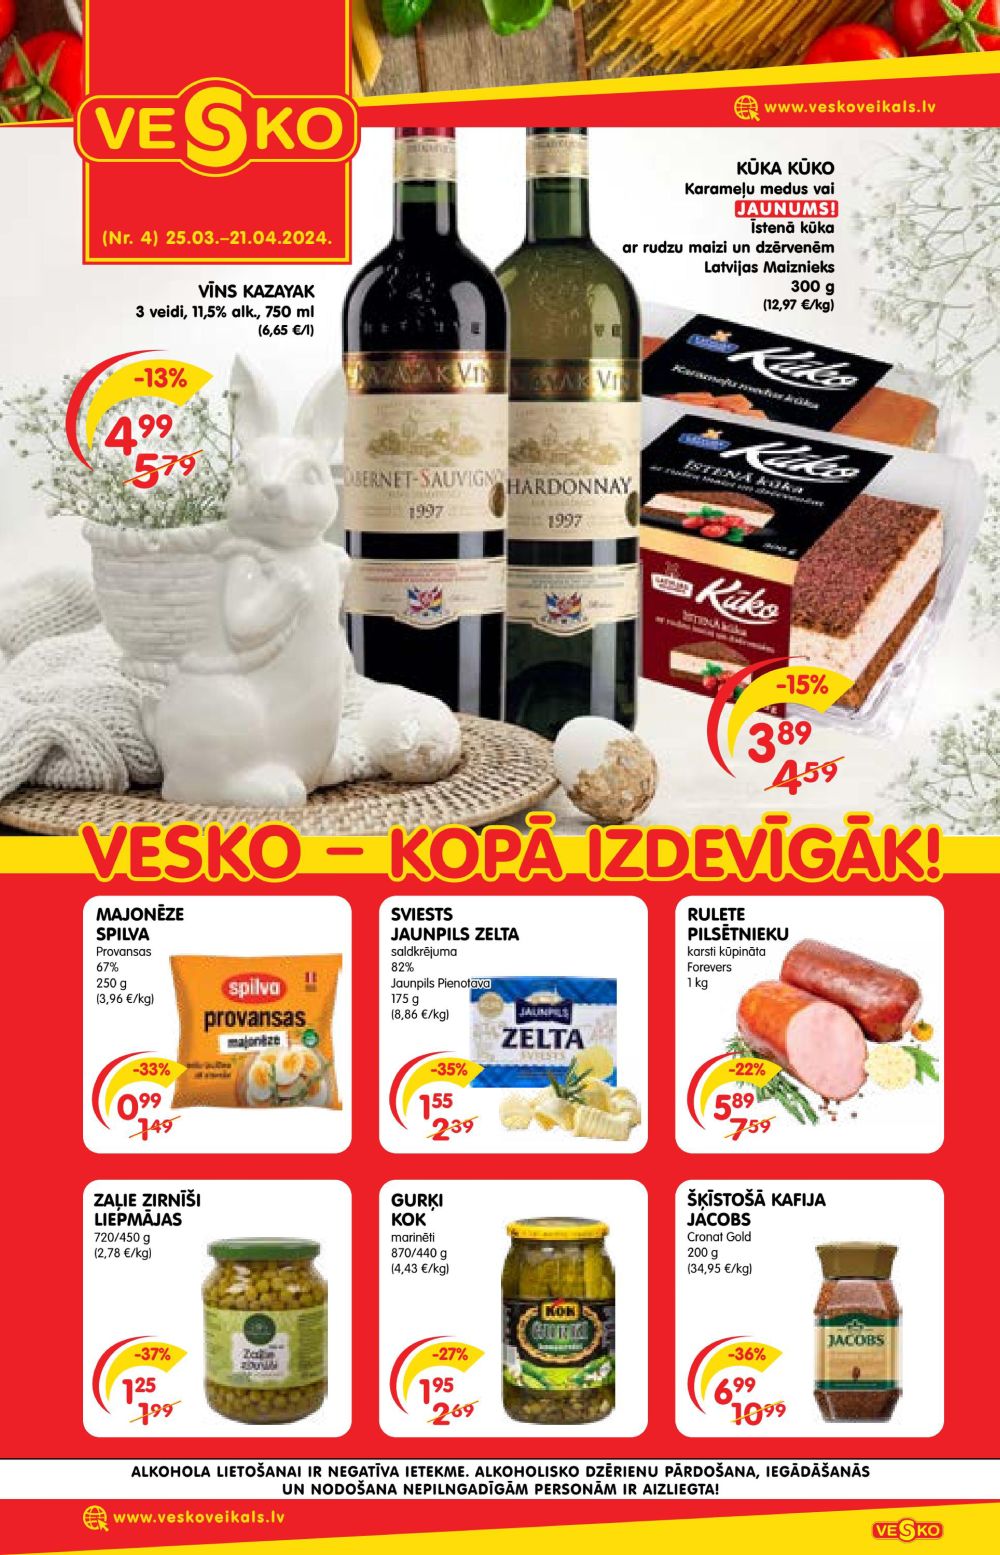 vesko - VESKO (25.03.2024 - 21.04.2024) - page: 1